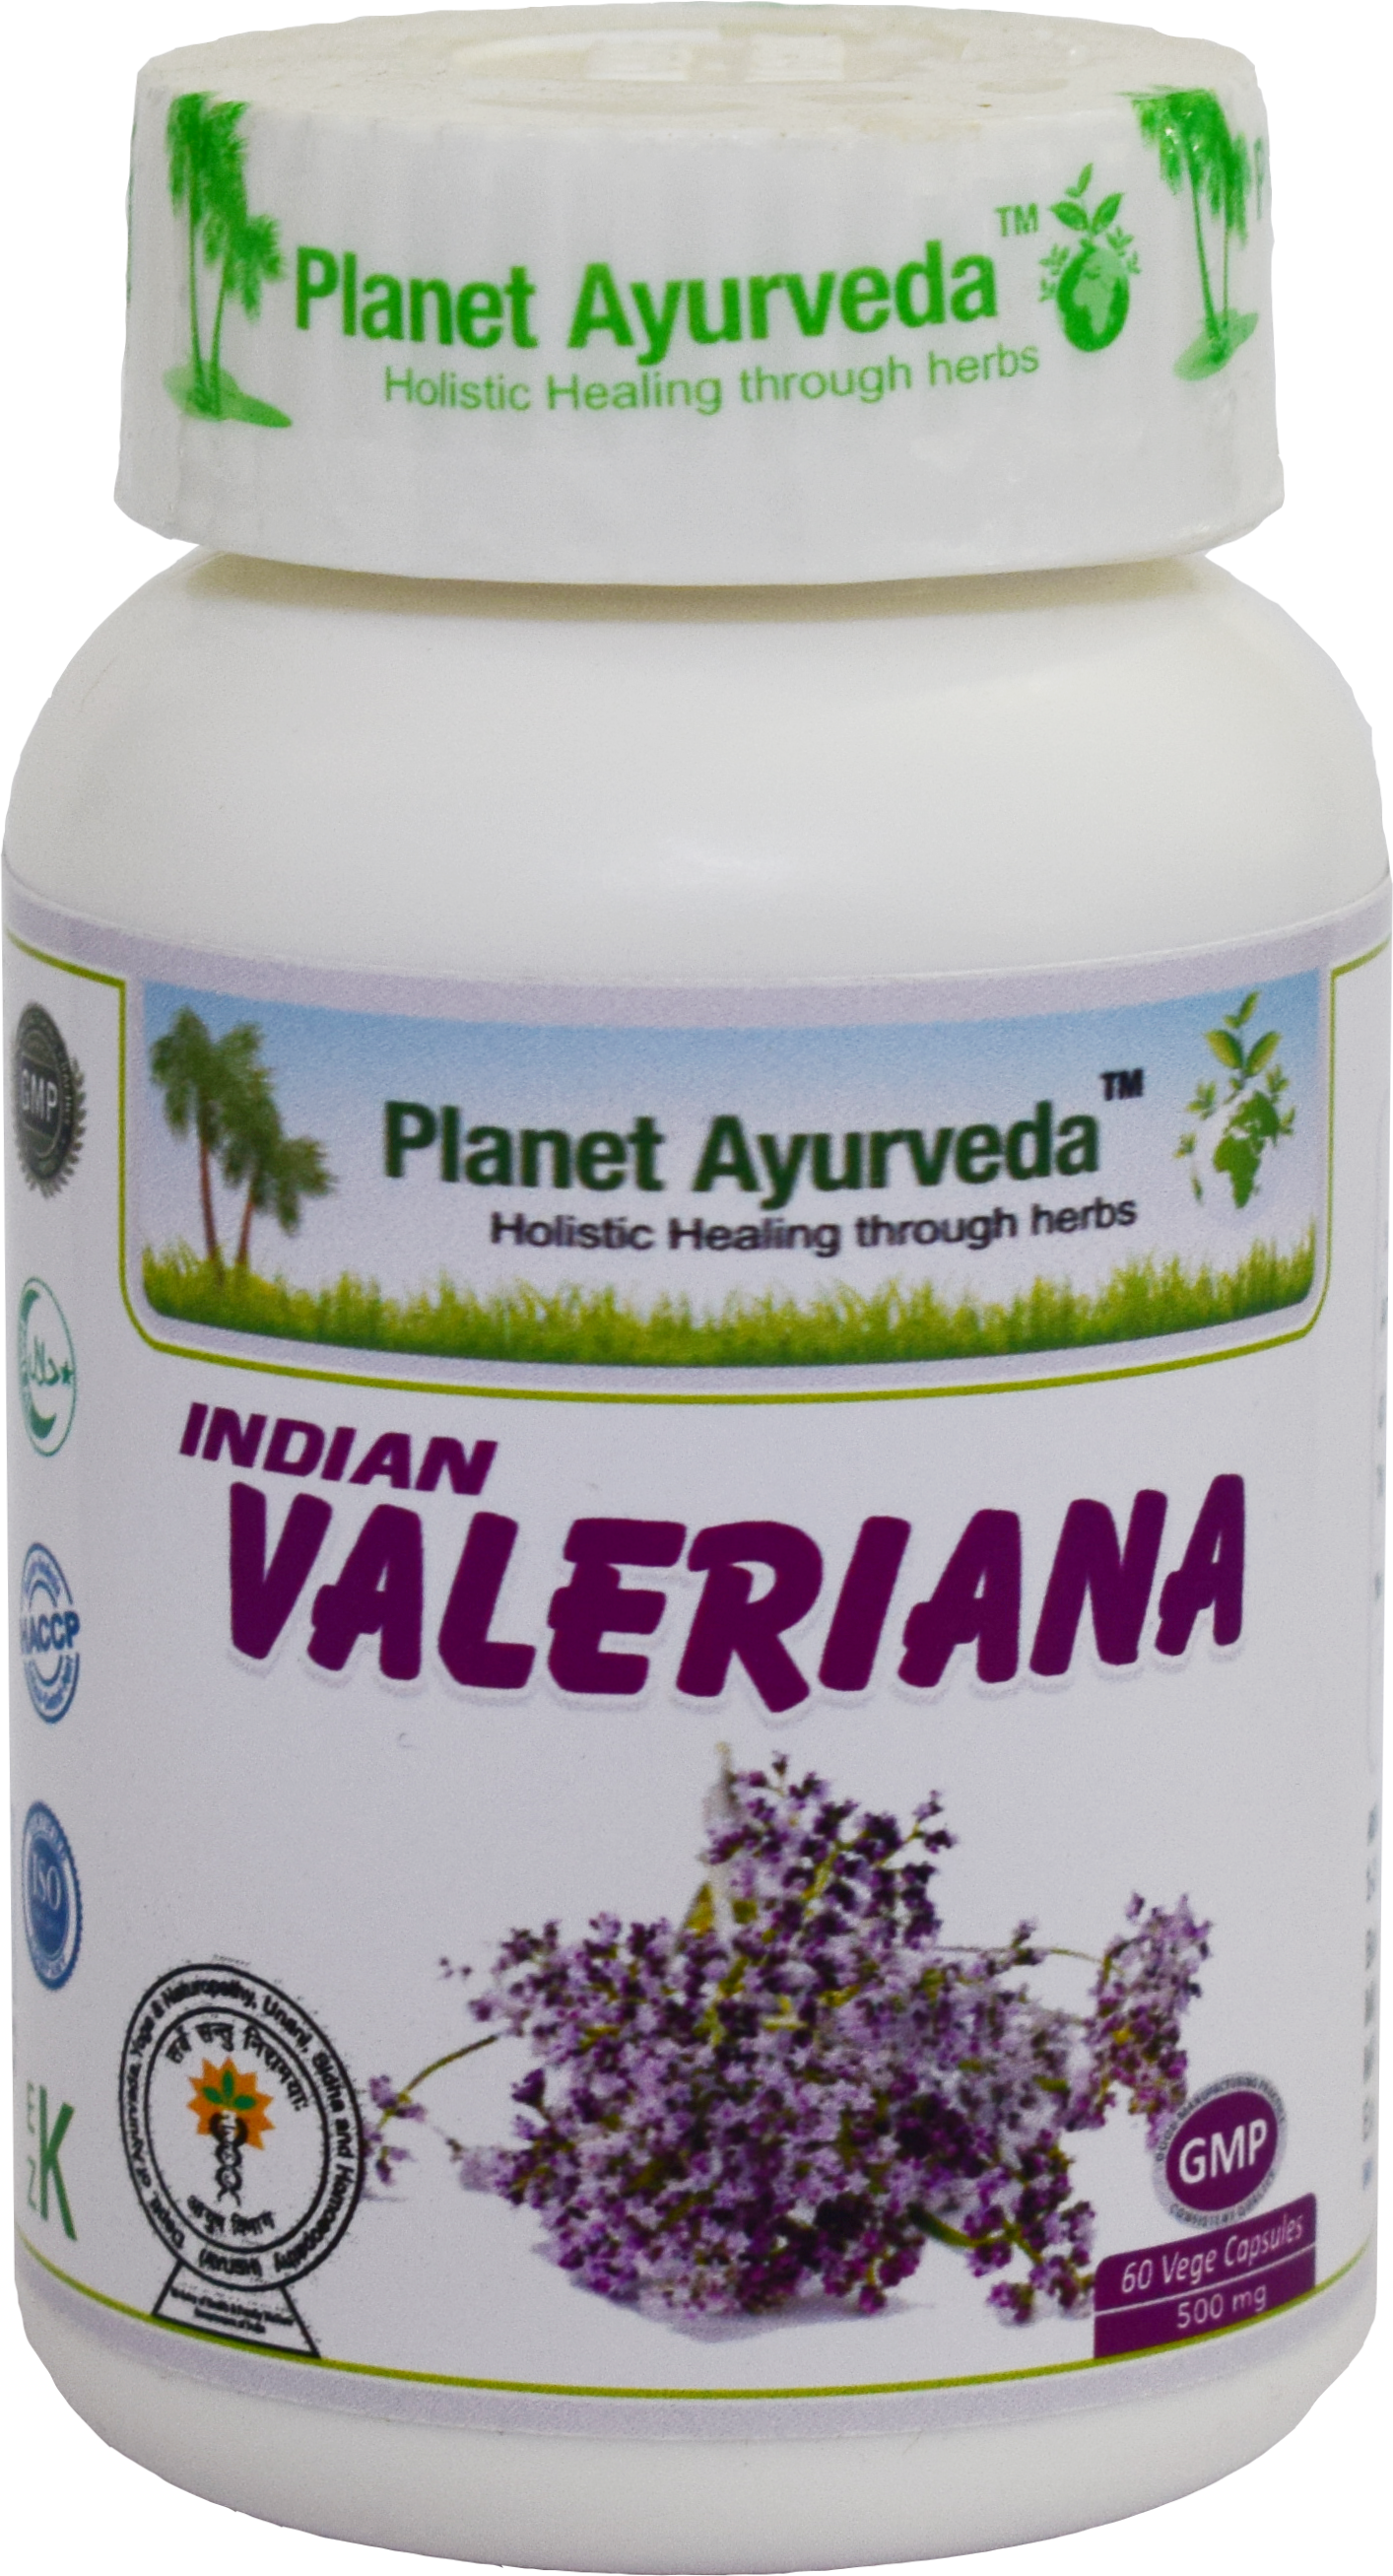 Buy Planet Ayurveda Indian Valeriana Capsules at Best Price Online